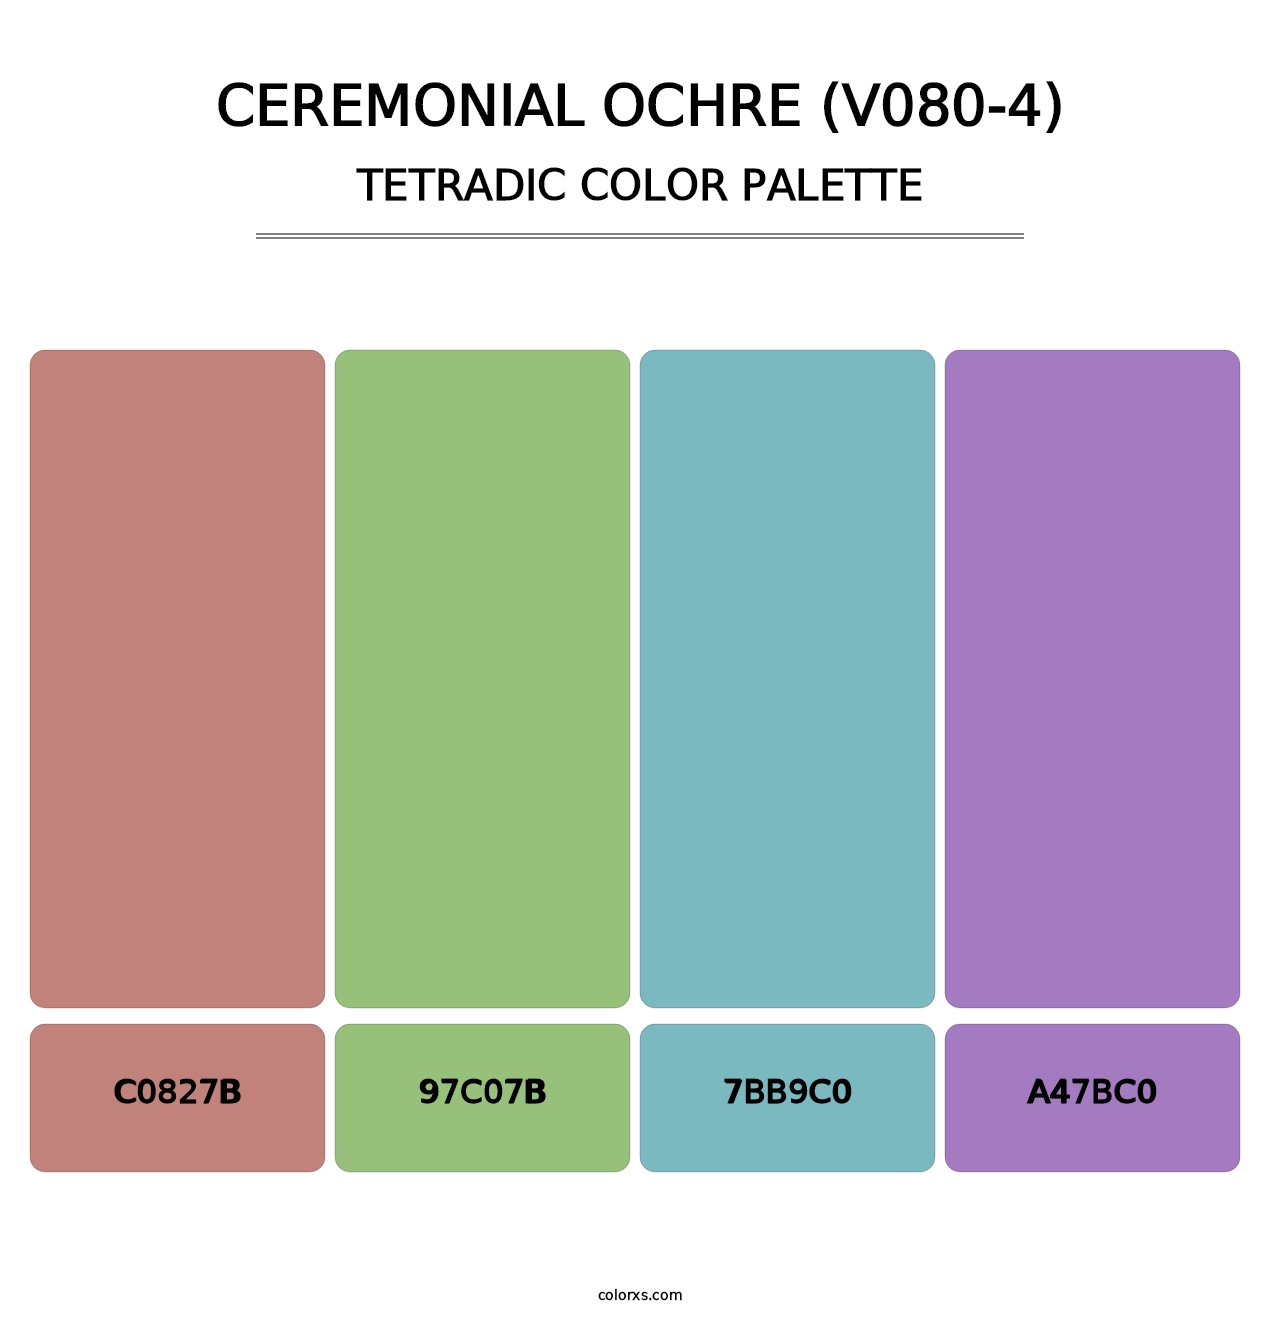 Ceremonial Ochre (V080-4) - Tetradic Color Palette